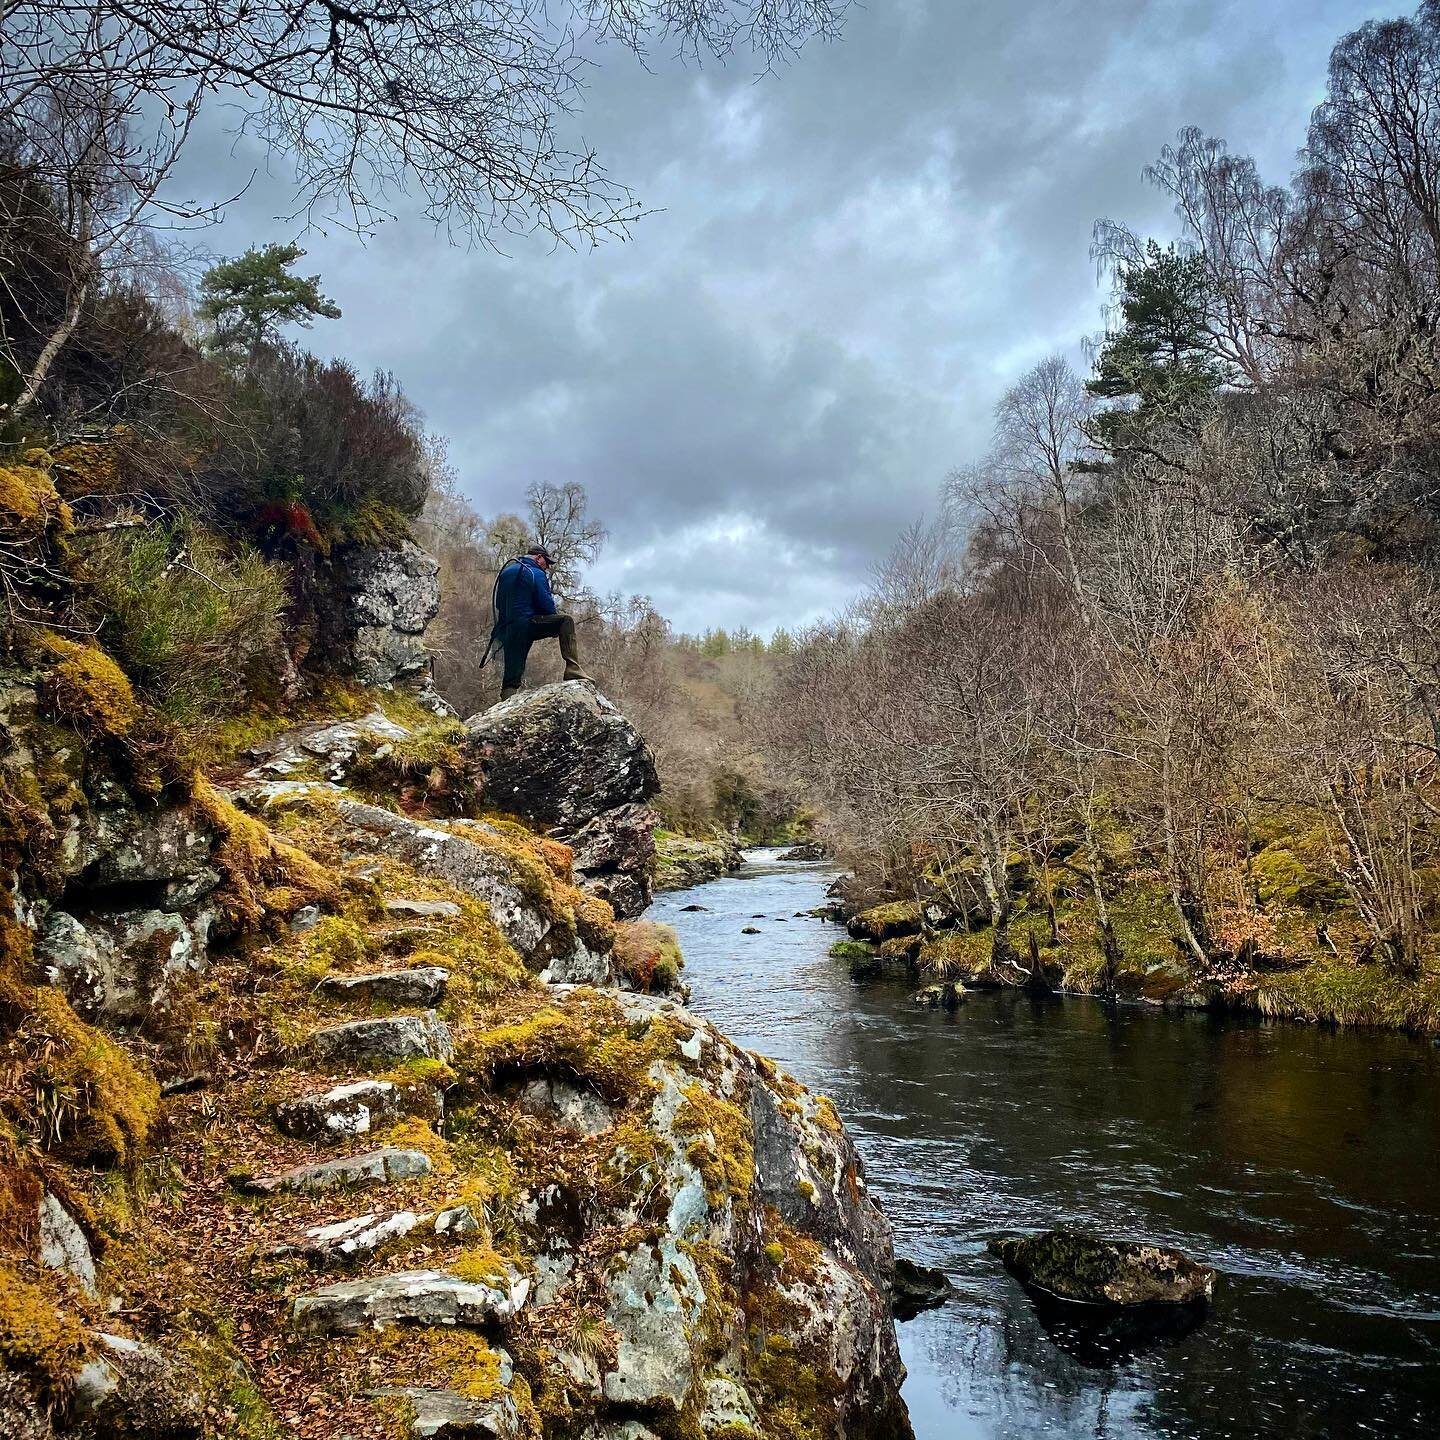 The highland ghillie surveying his water....

#river #fishing #highlands #rivershin #shinfalls #salmon #salmonfishing #atlanticsalmon #thetugisthedrug #reiver #reivertravel #legendaryjourneys